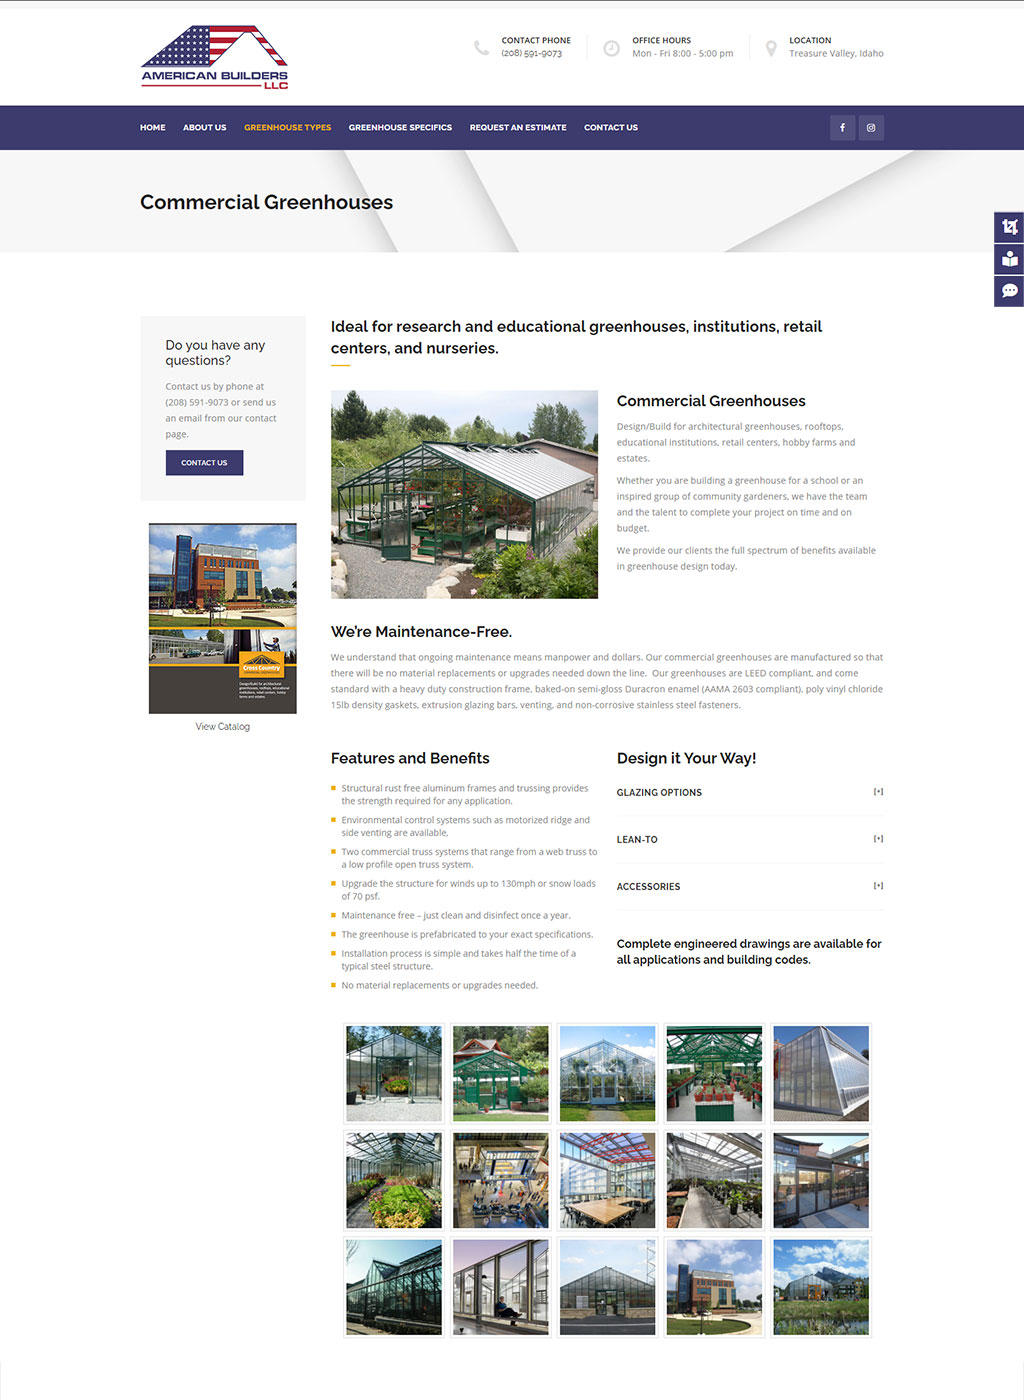 Website developed for American Builders LLC